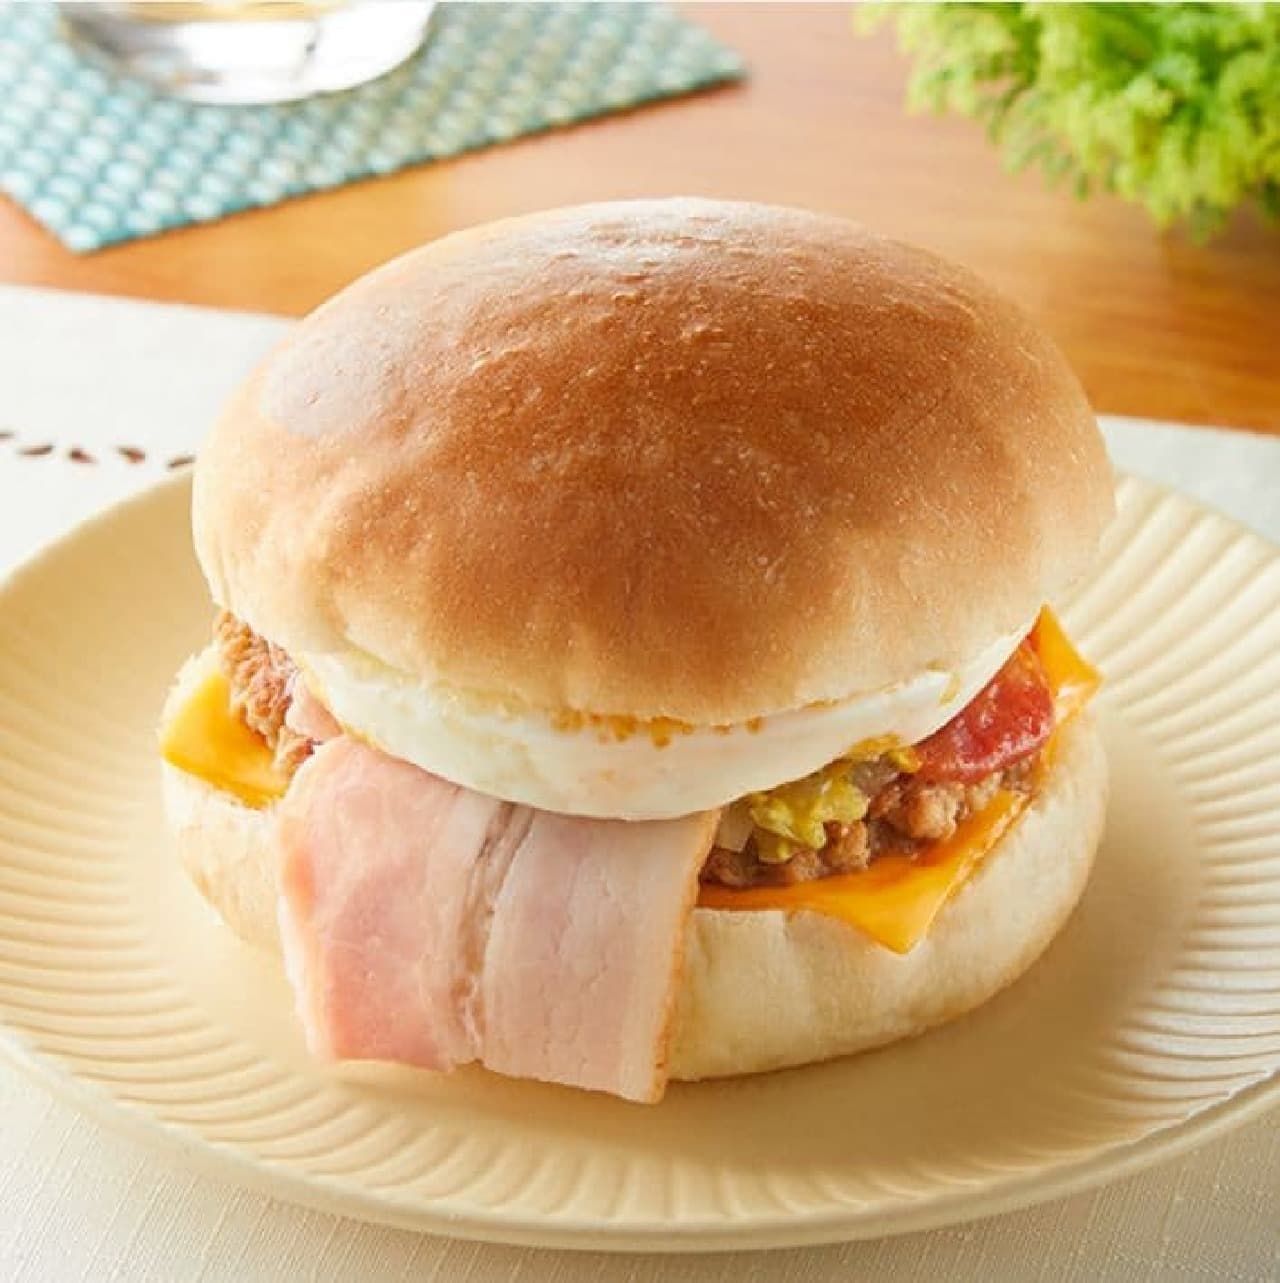 FamilyMart "Bacon and Egg Cheeseburger